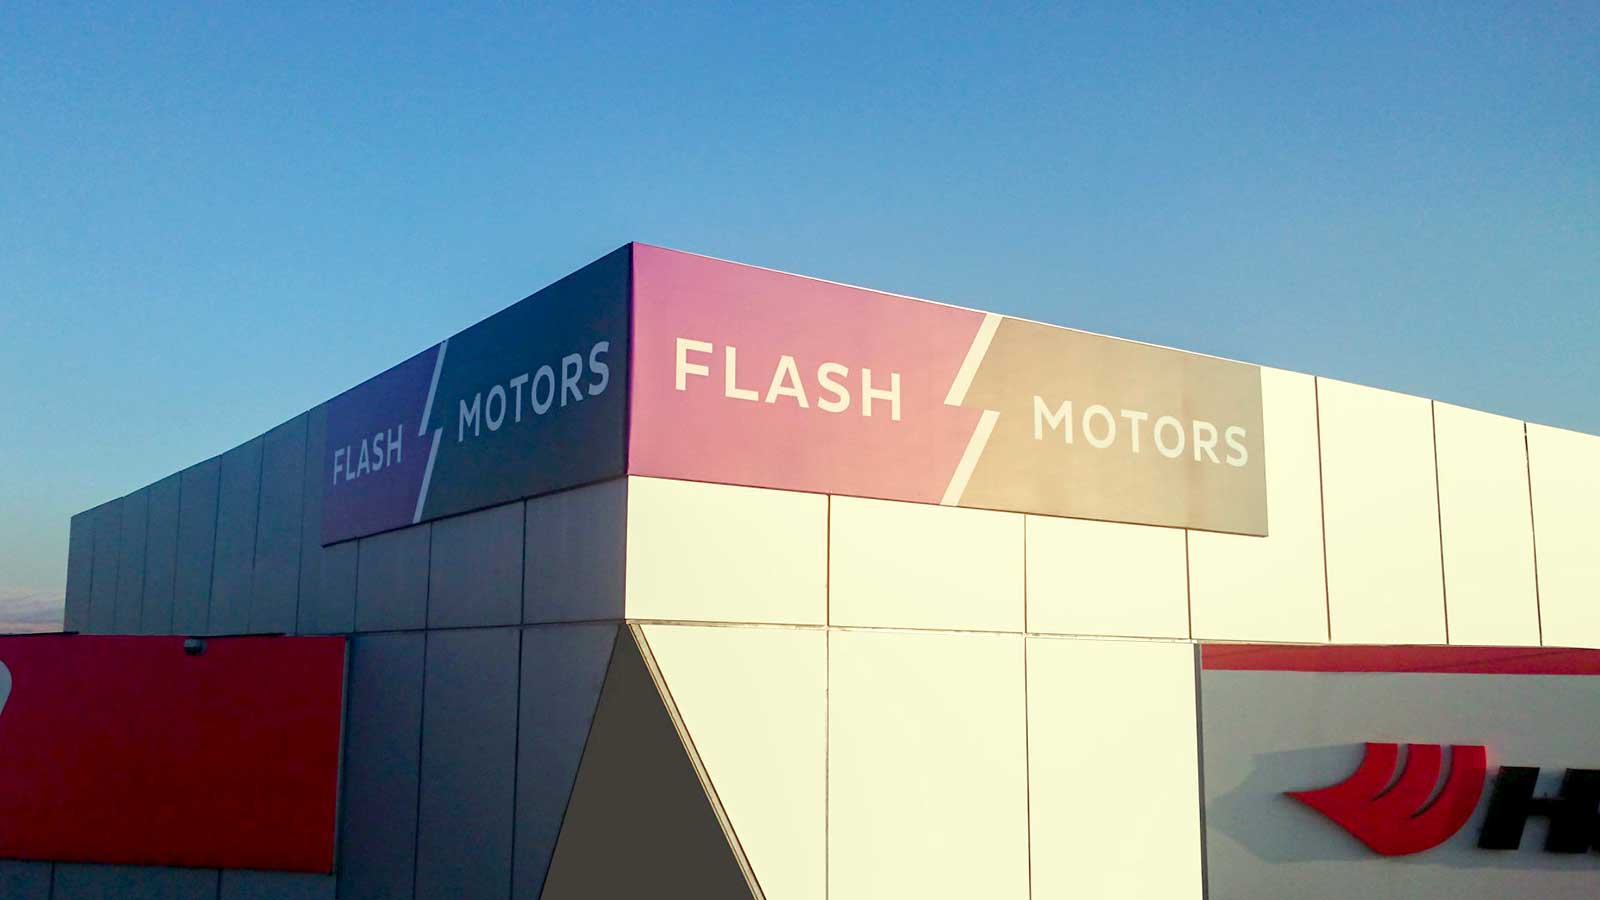 flash motors aluminum signs on building